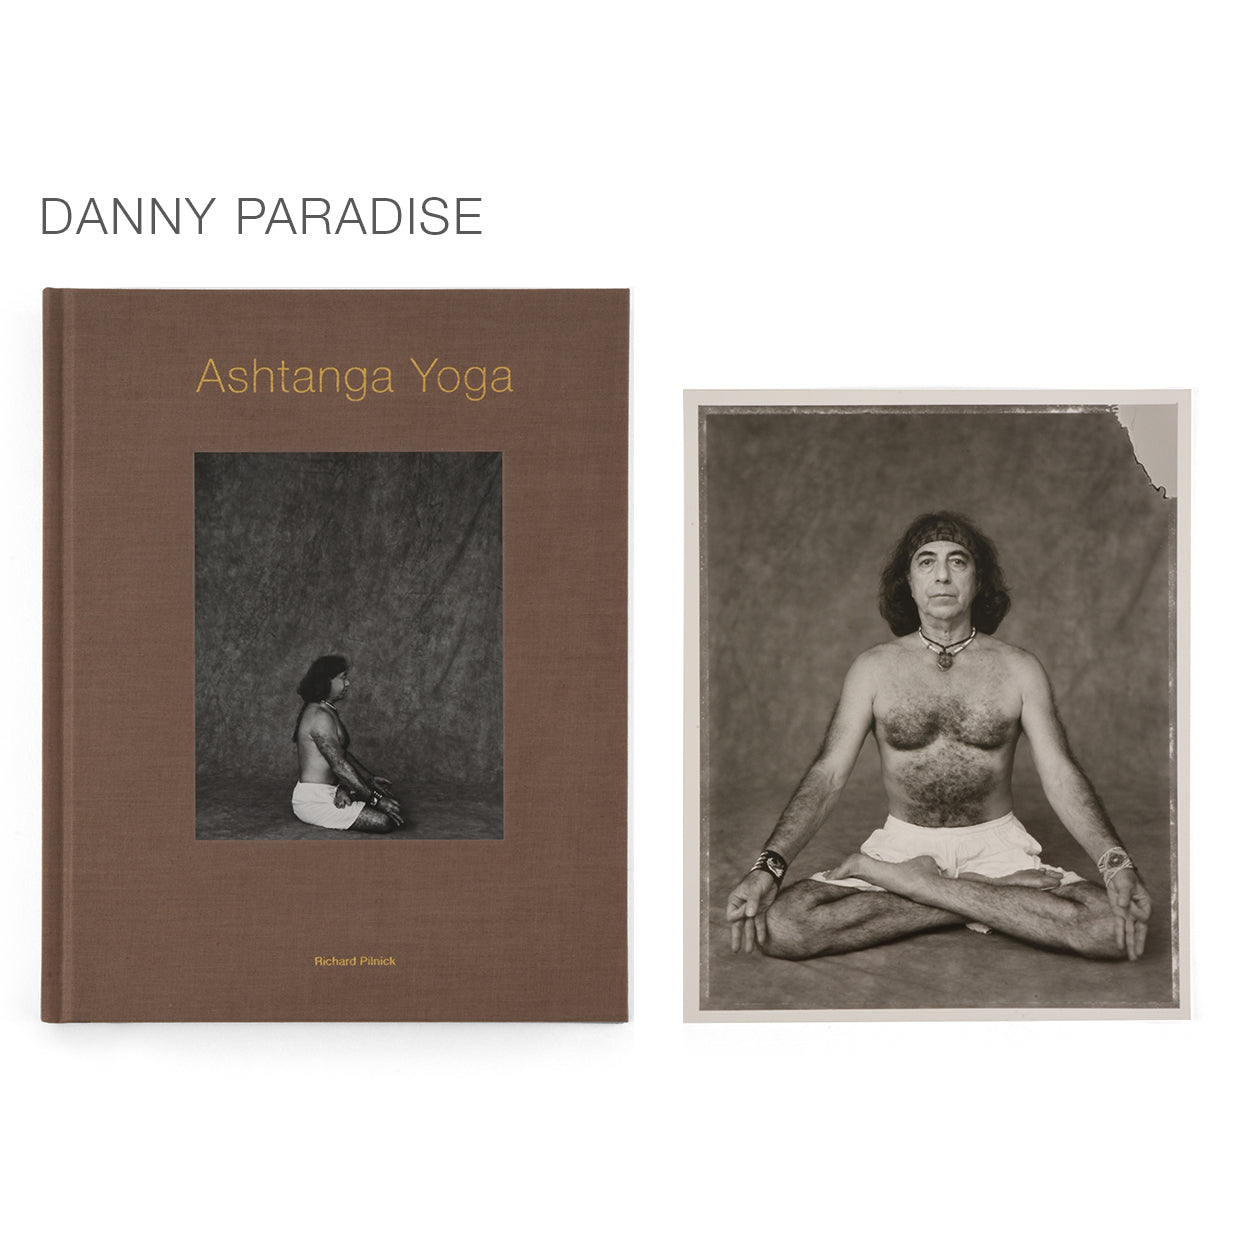 Danny Paradise Limited Edition Ashtanga Yoga Book